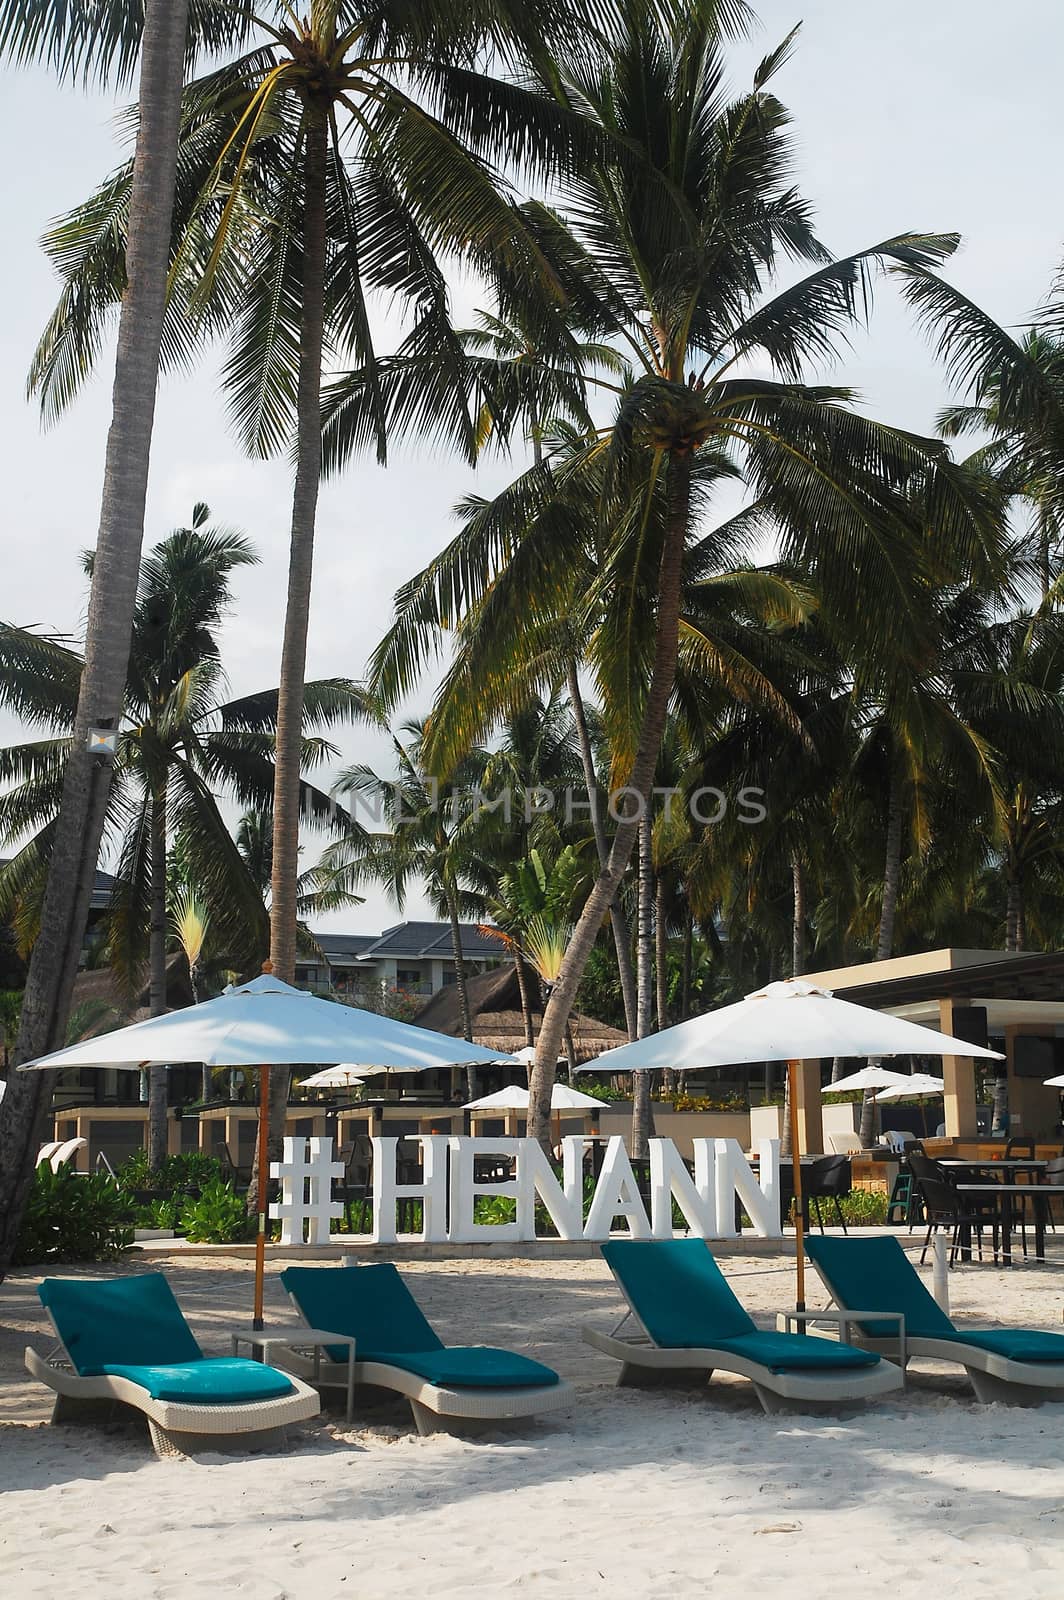 BOHOL, PH - SEPT 1 - Hennan resort beach chairs on September 1, 2015 in Alona beach, Panglao island, Bohol, Philippines